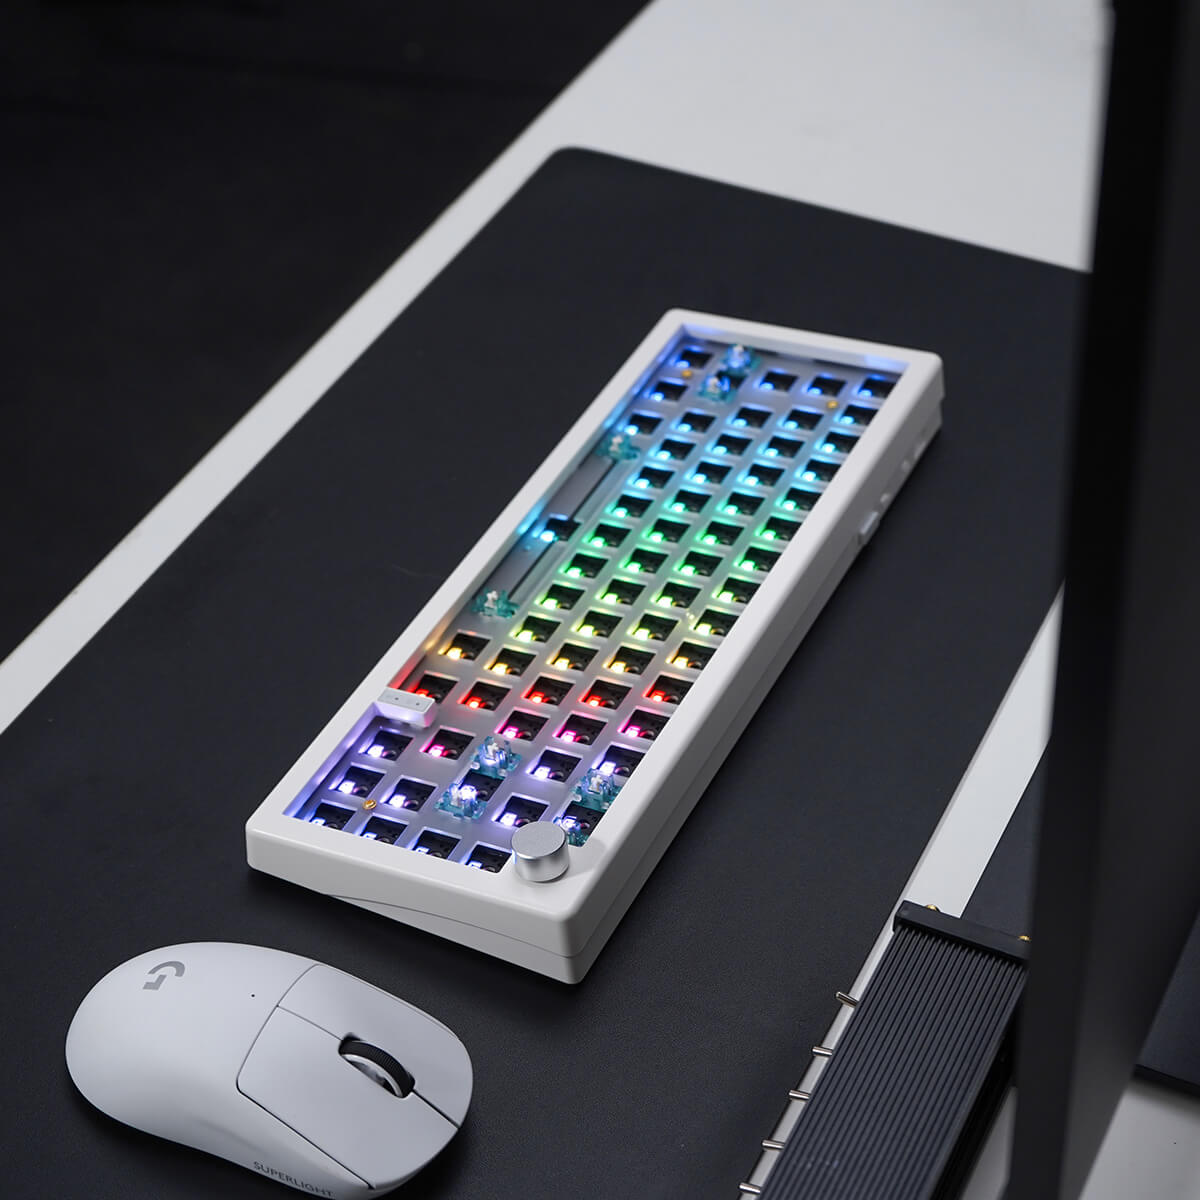 GMK67 Wireless RGB Mechanical Keyboard Kit ( 7 Colors )